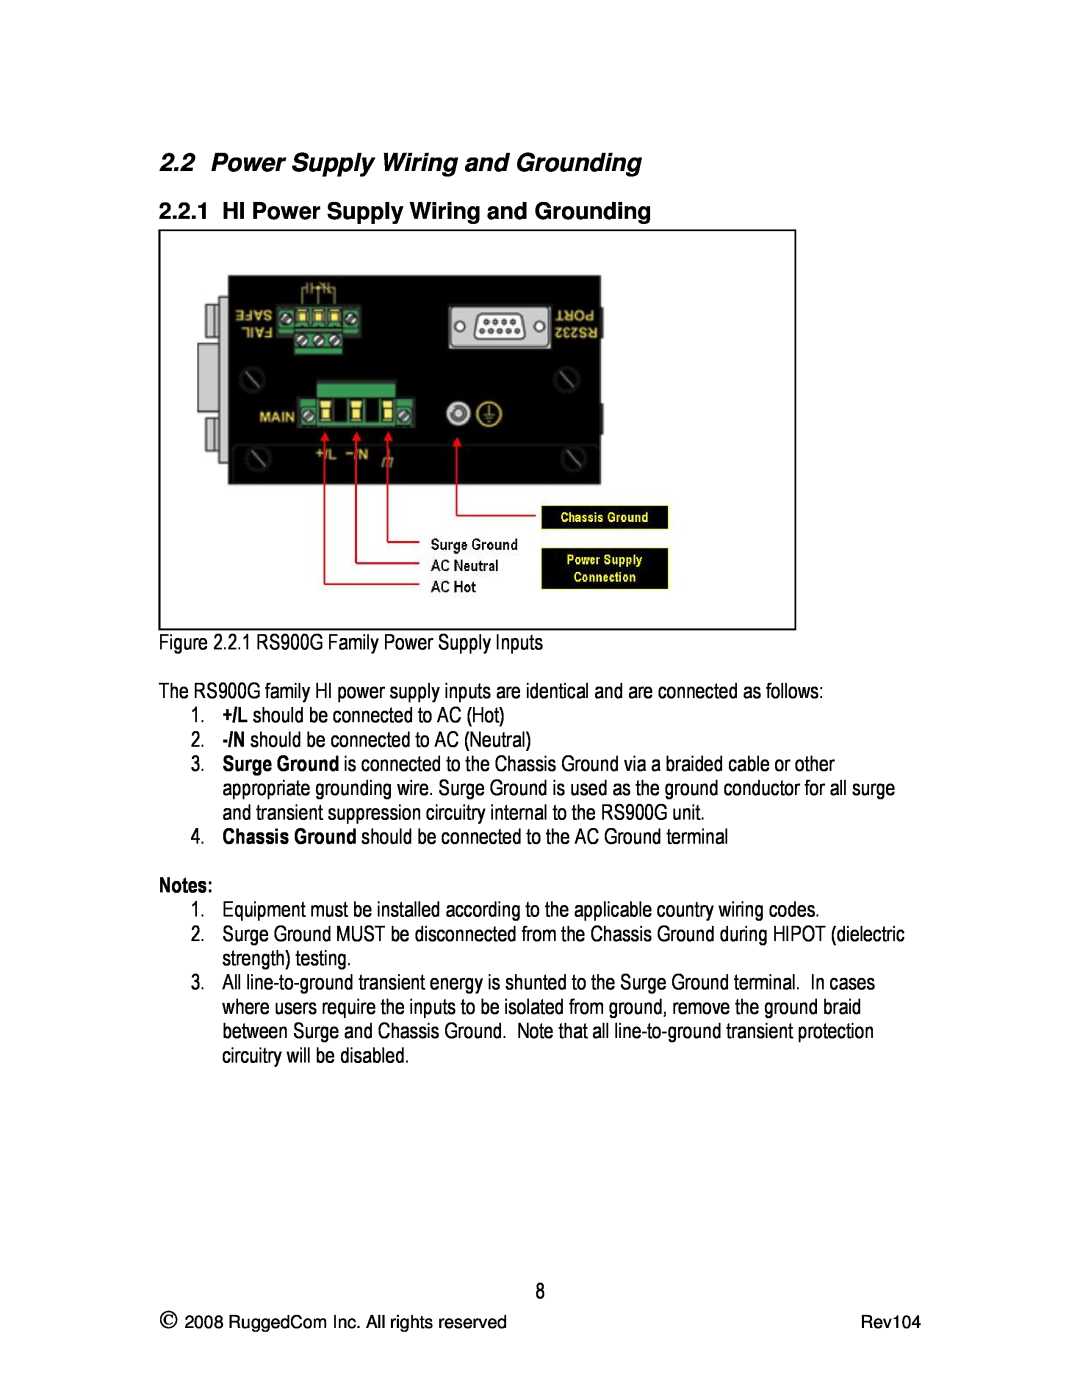 RuggedCom RS900G manual HI Power Supply Wiring and Grounding 